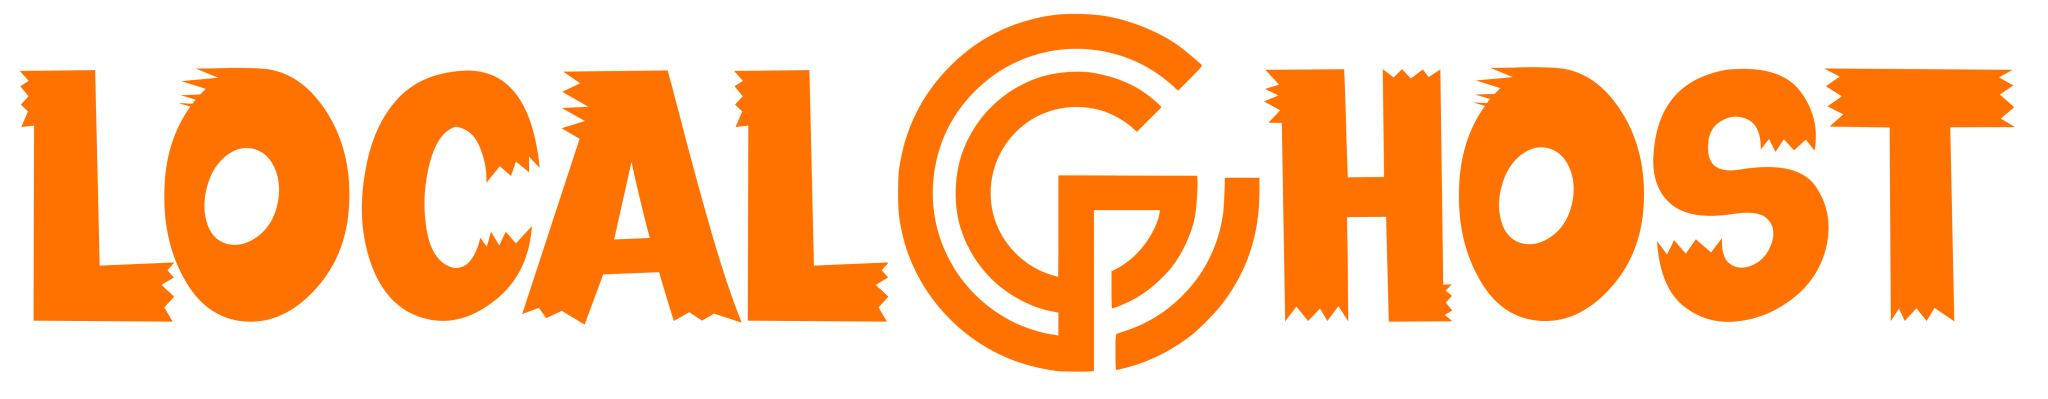 LocalghostFI_Logo